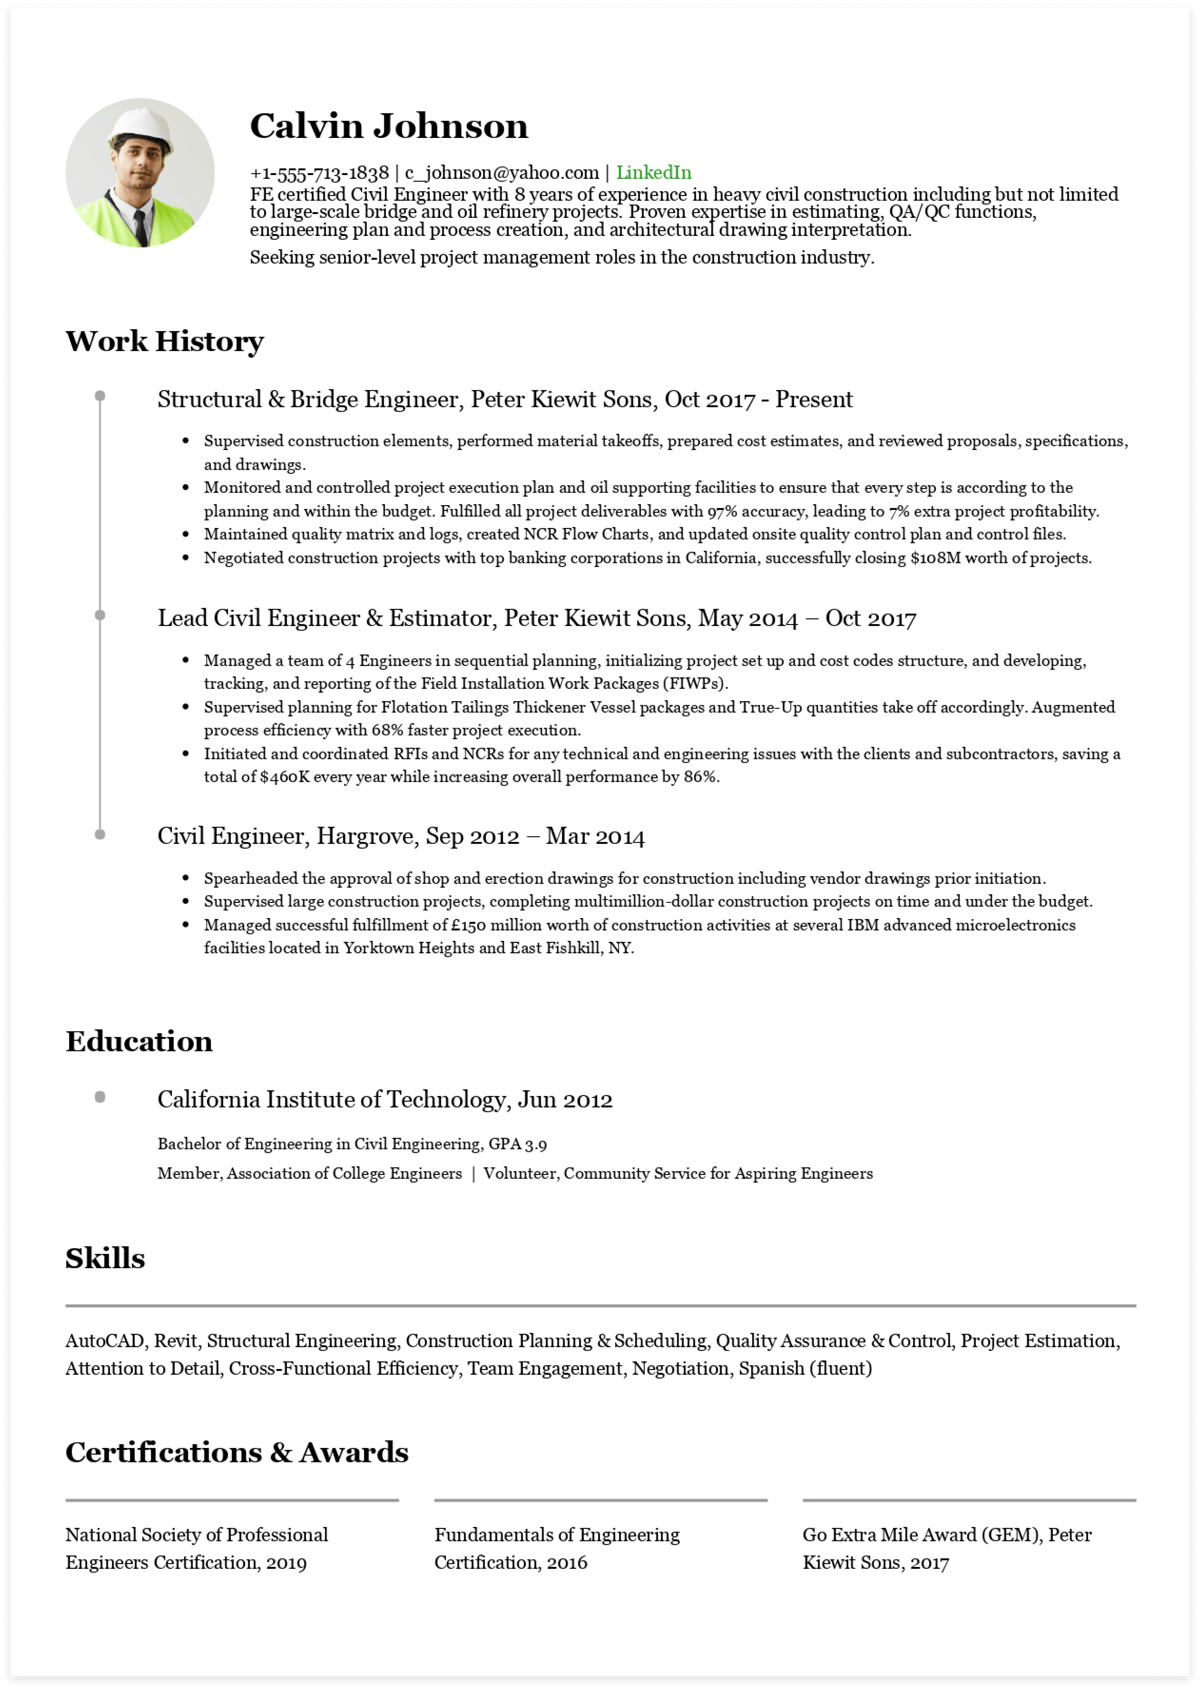 Click to download Calvin's civil engineer resume. Generated via CakeResume.